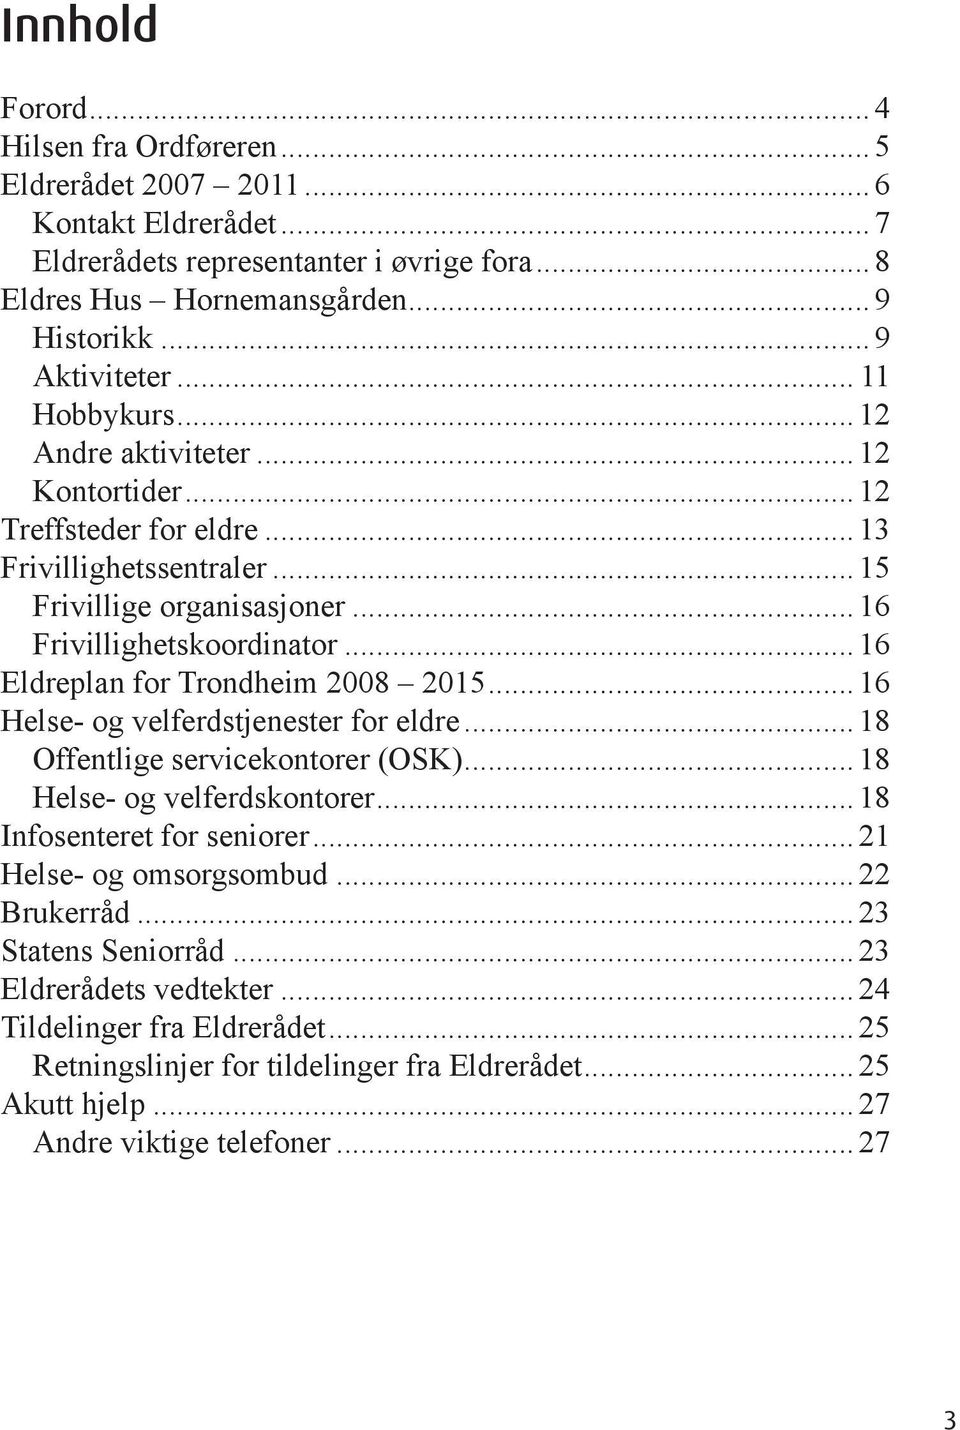 ..16 Eldreplan for Trondheim 2008 2015...16 Helse- og velferdstjenester for eldre...18 Offentlige servicekontorer (OSK)...18 Helse- og velferdskontorer...18 Infosenteret for seniorer.